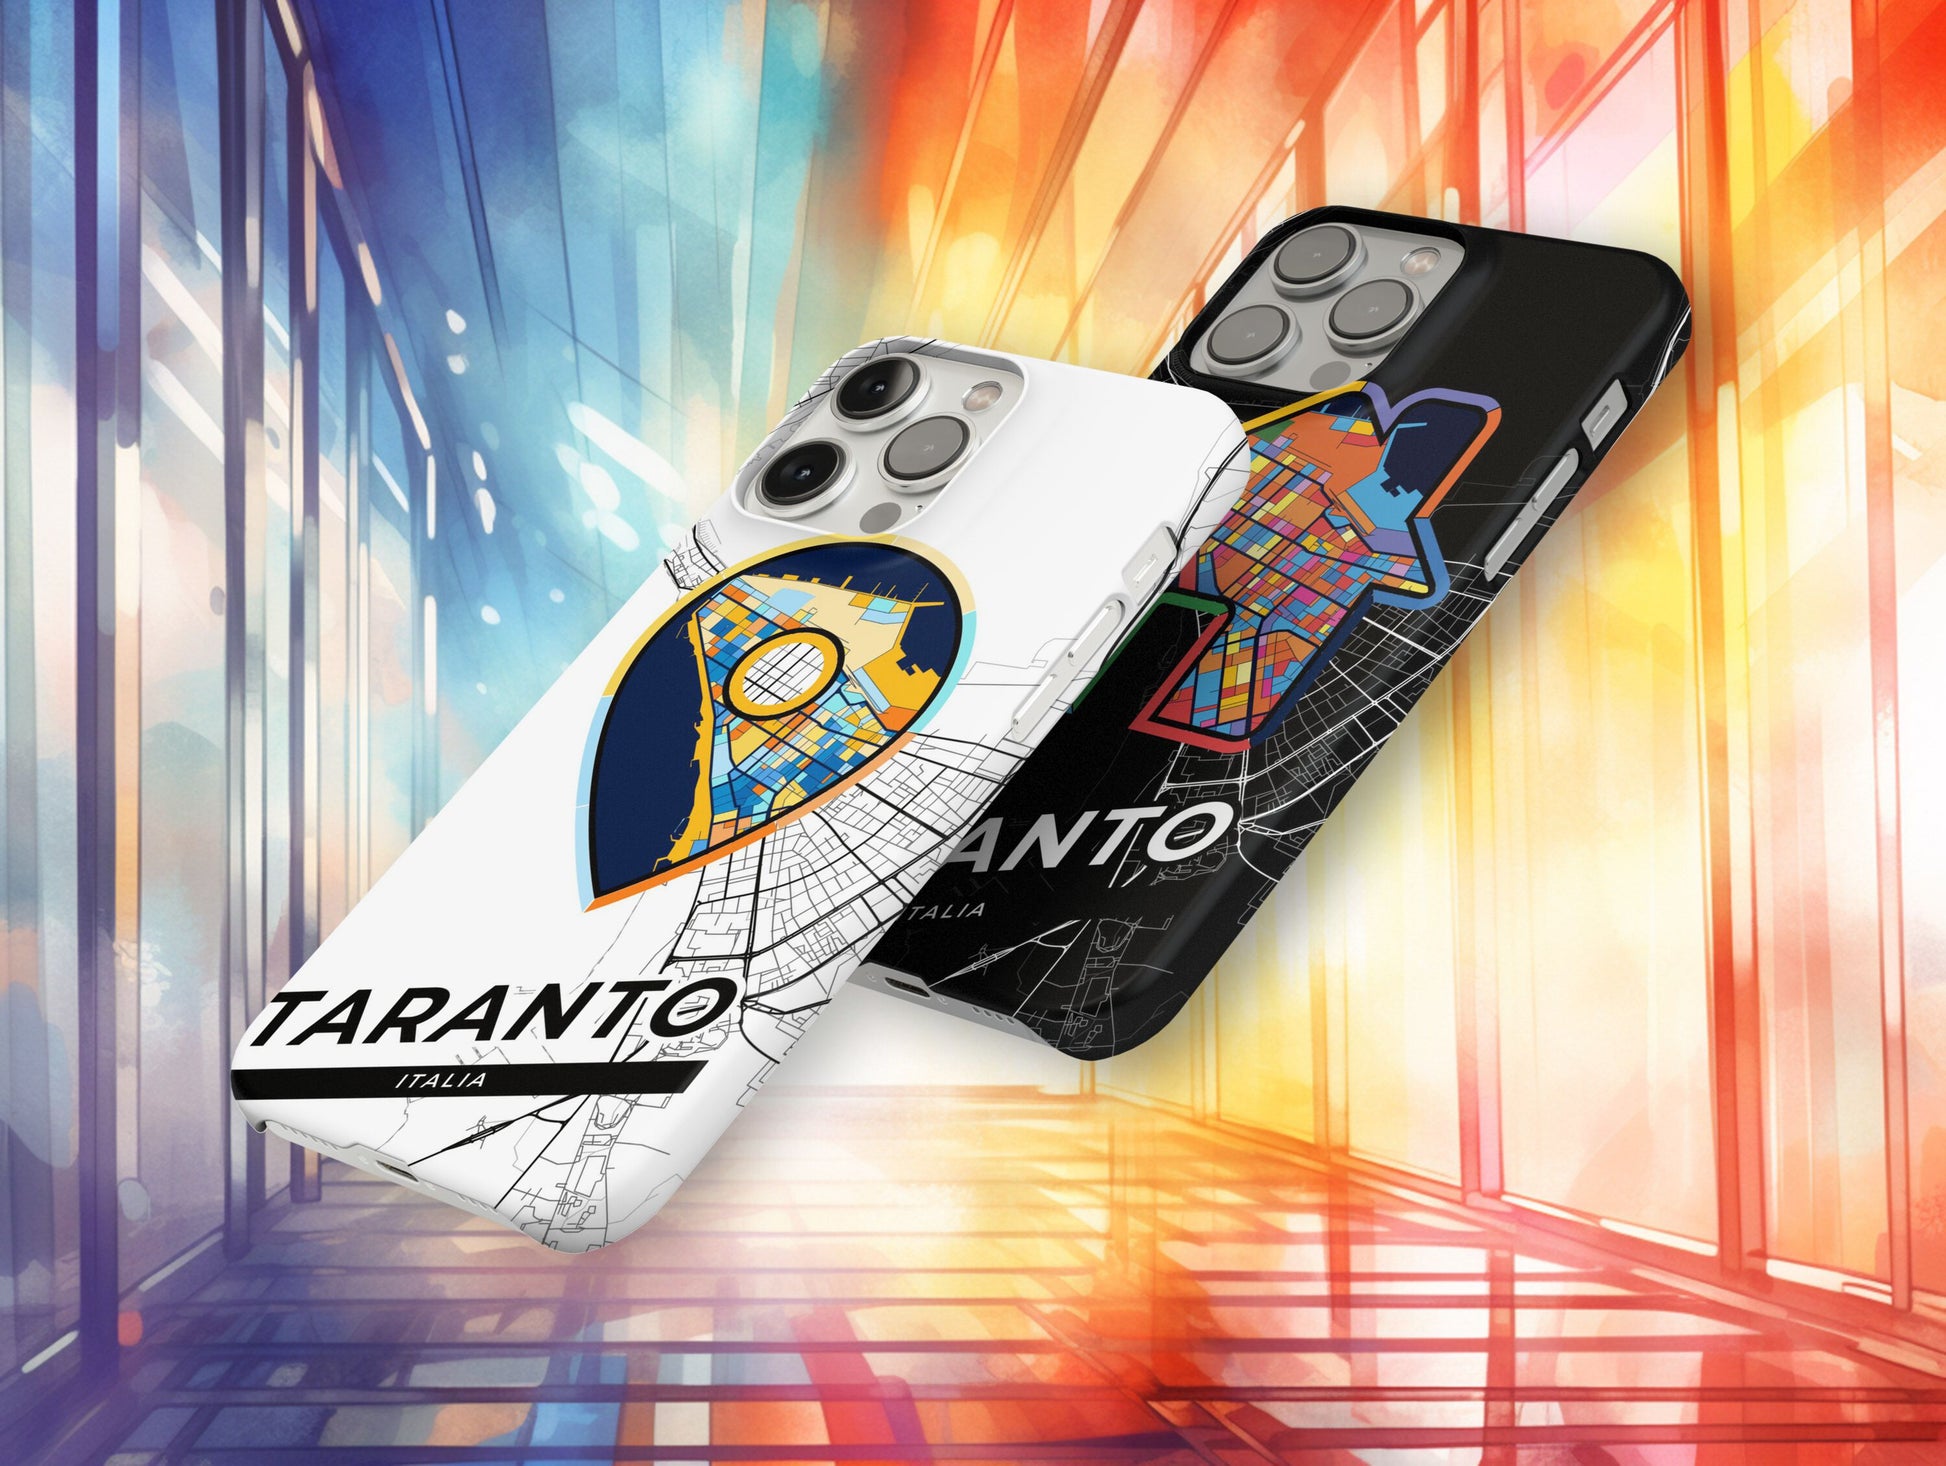 Taranto Italy slim phone case with colorful icon